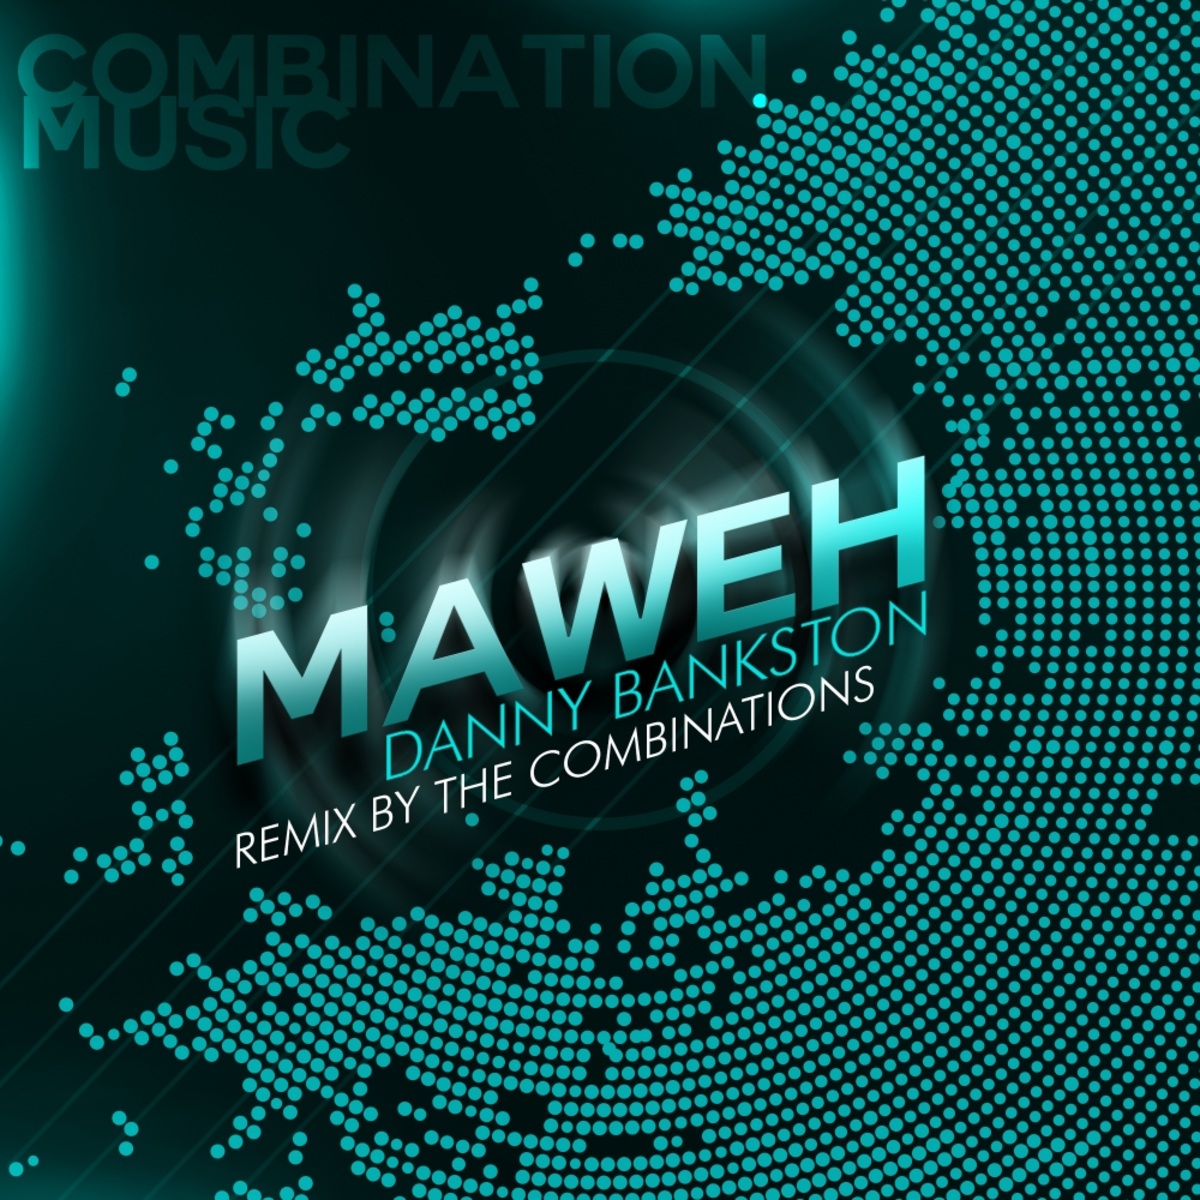 Danny Bankston - Maweh / CombiNation Music